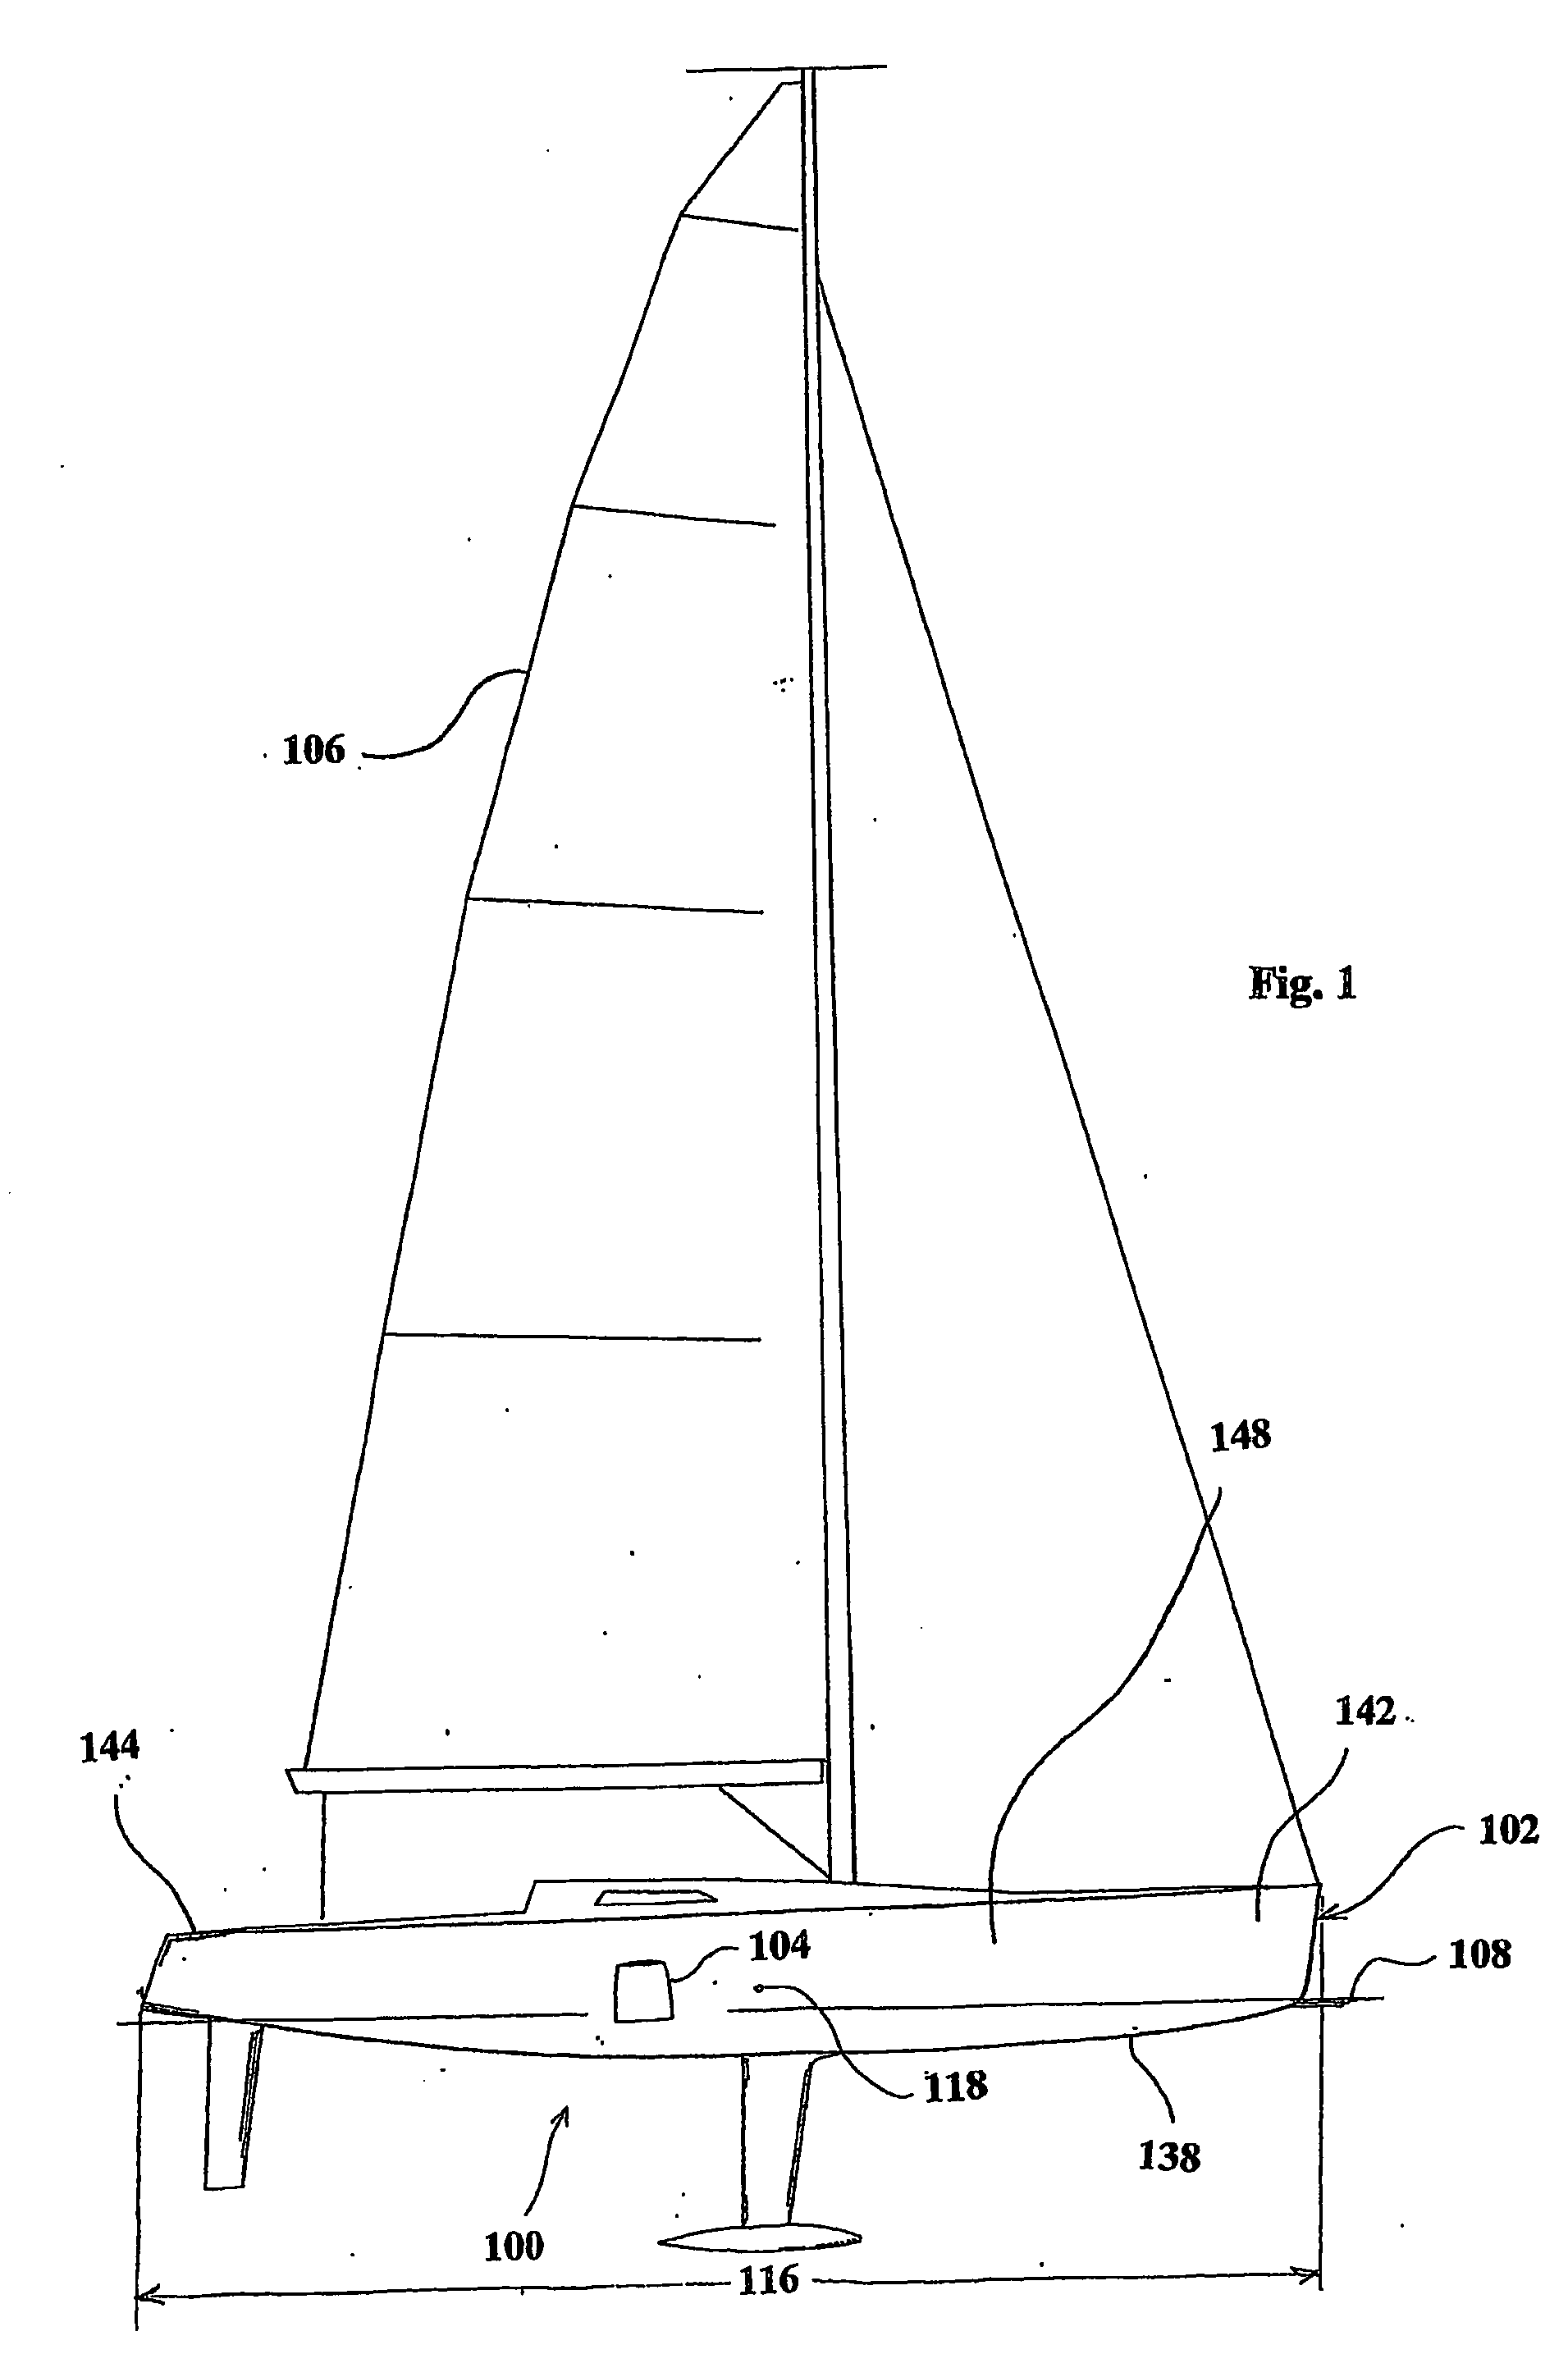 Monohull sailing vessel having a lifting hydrofoil